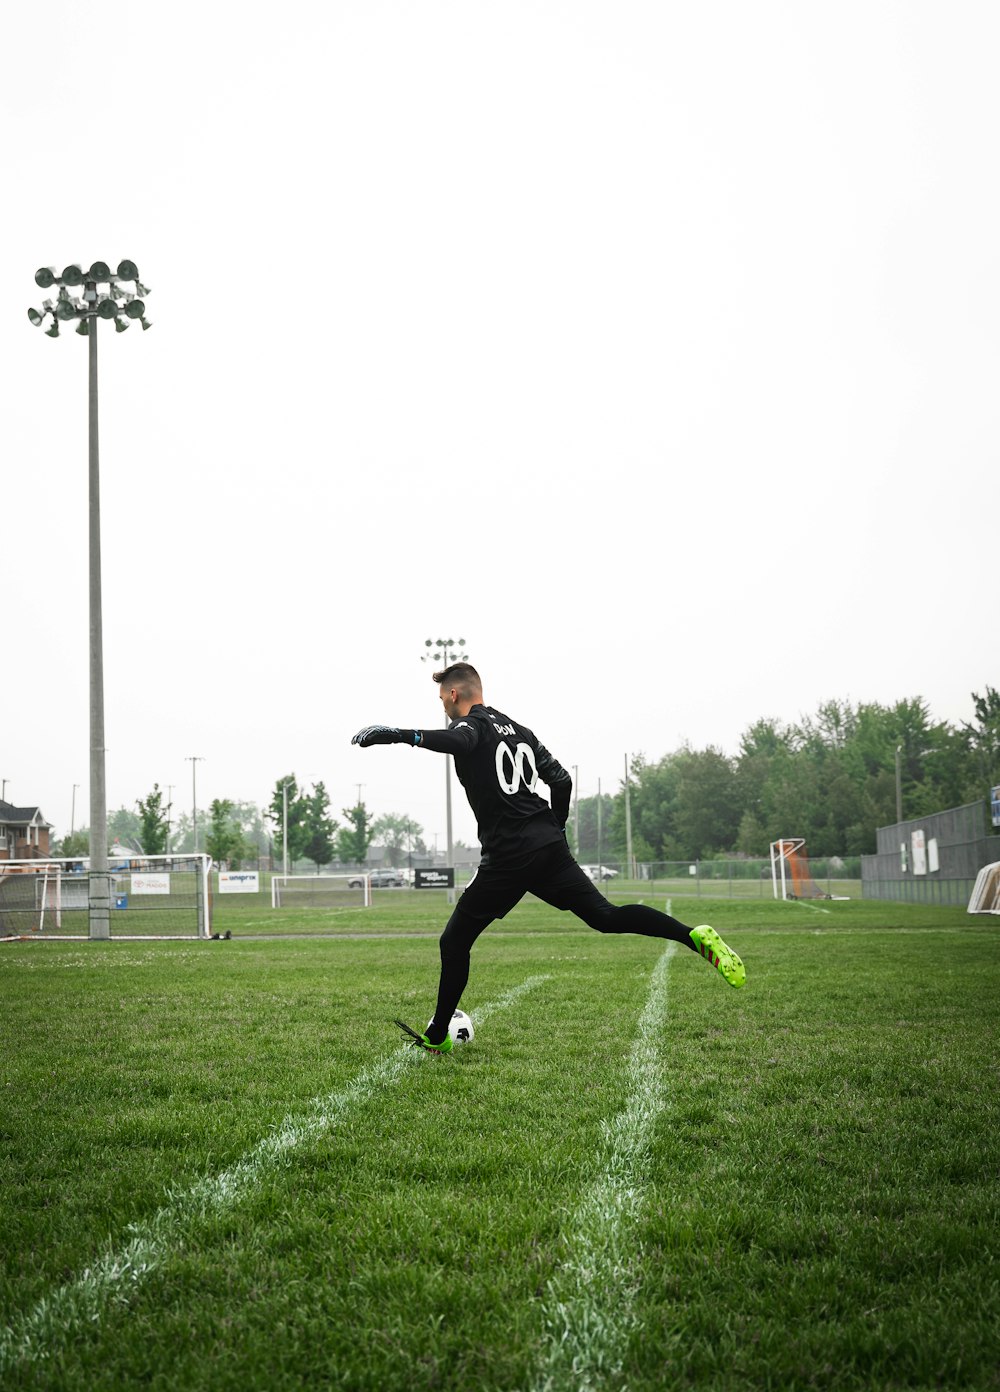 a man in a black uniform kicking a soccer ball